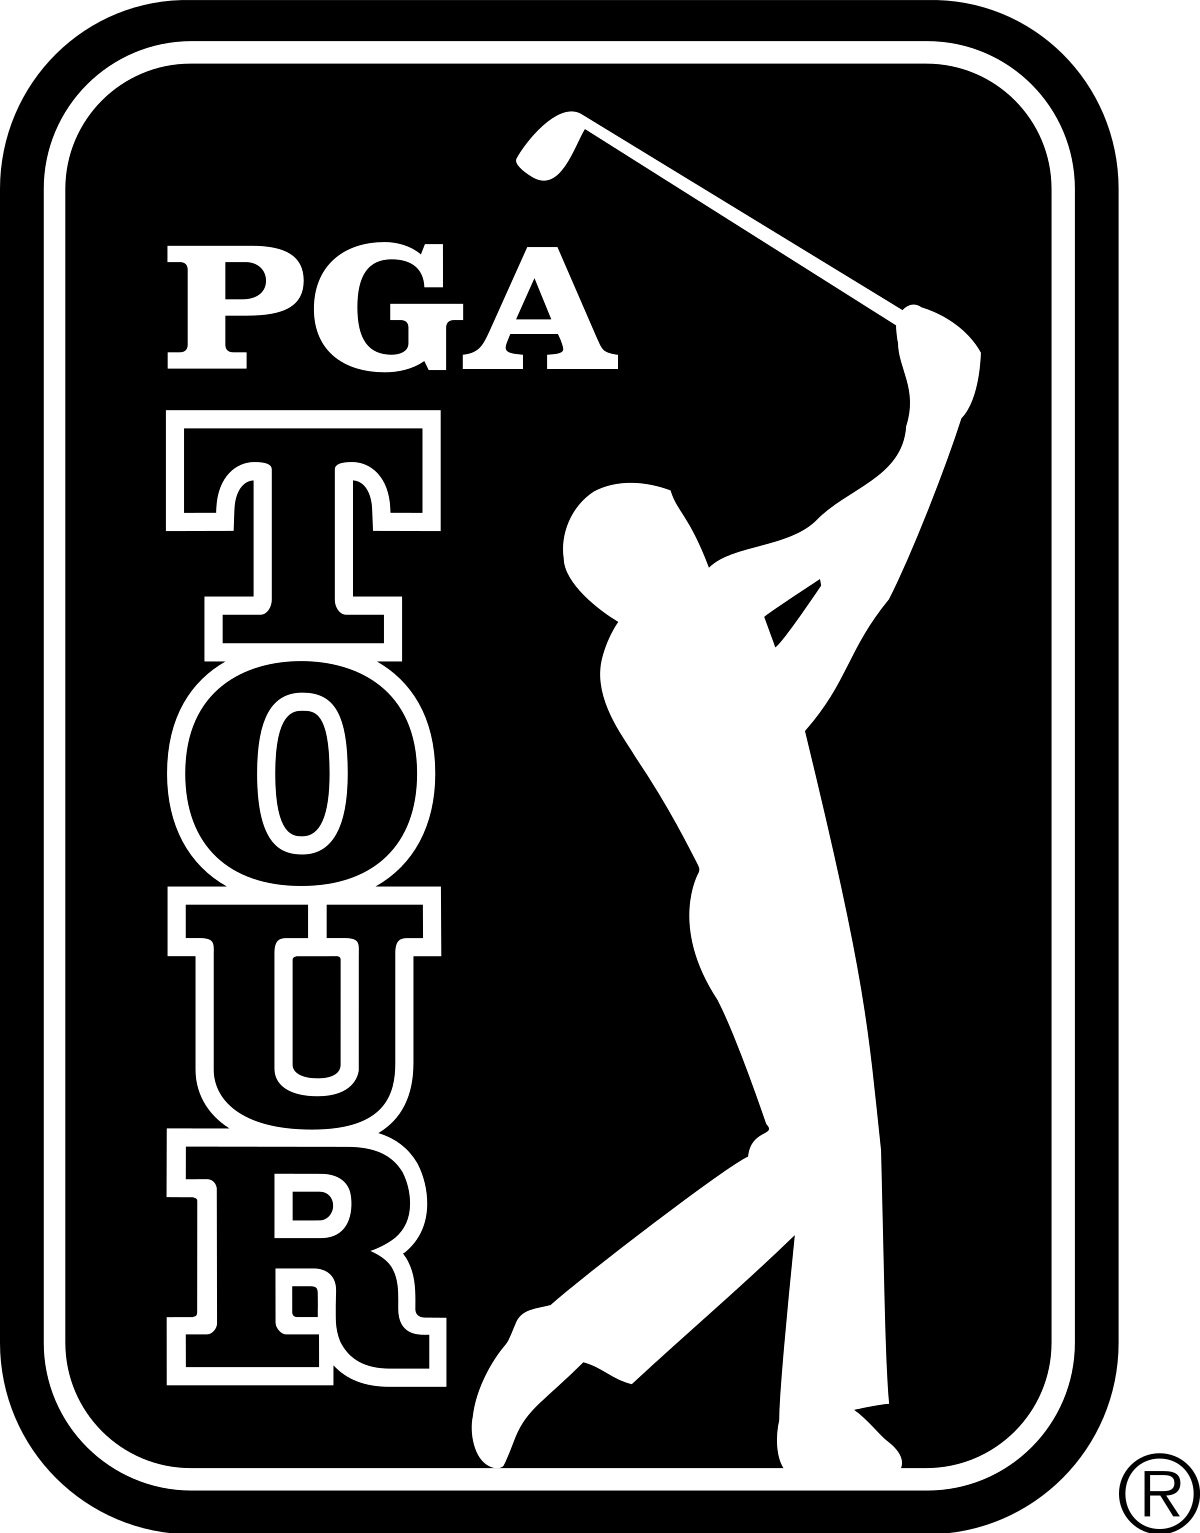 PGA_Tour_logo.jpg